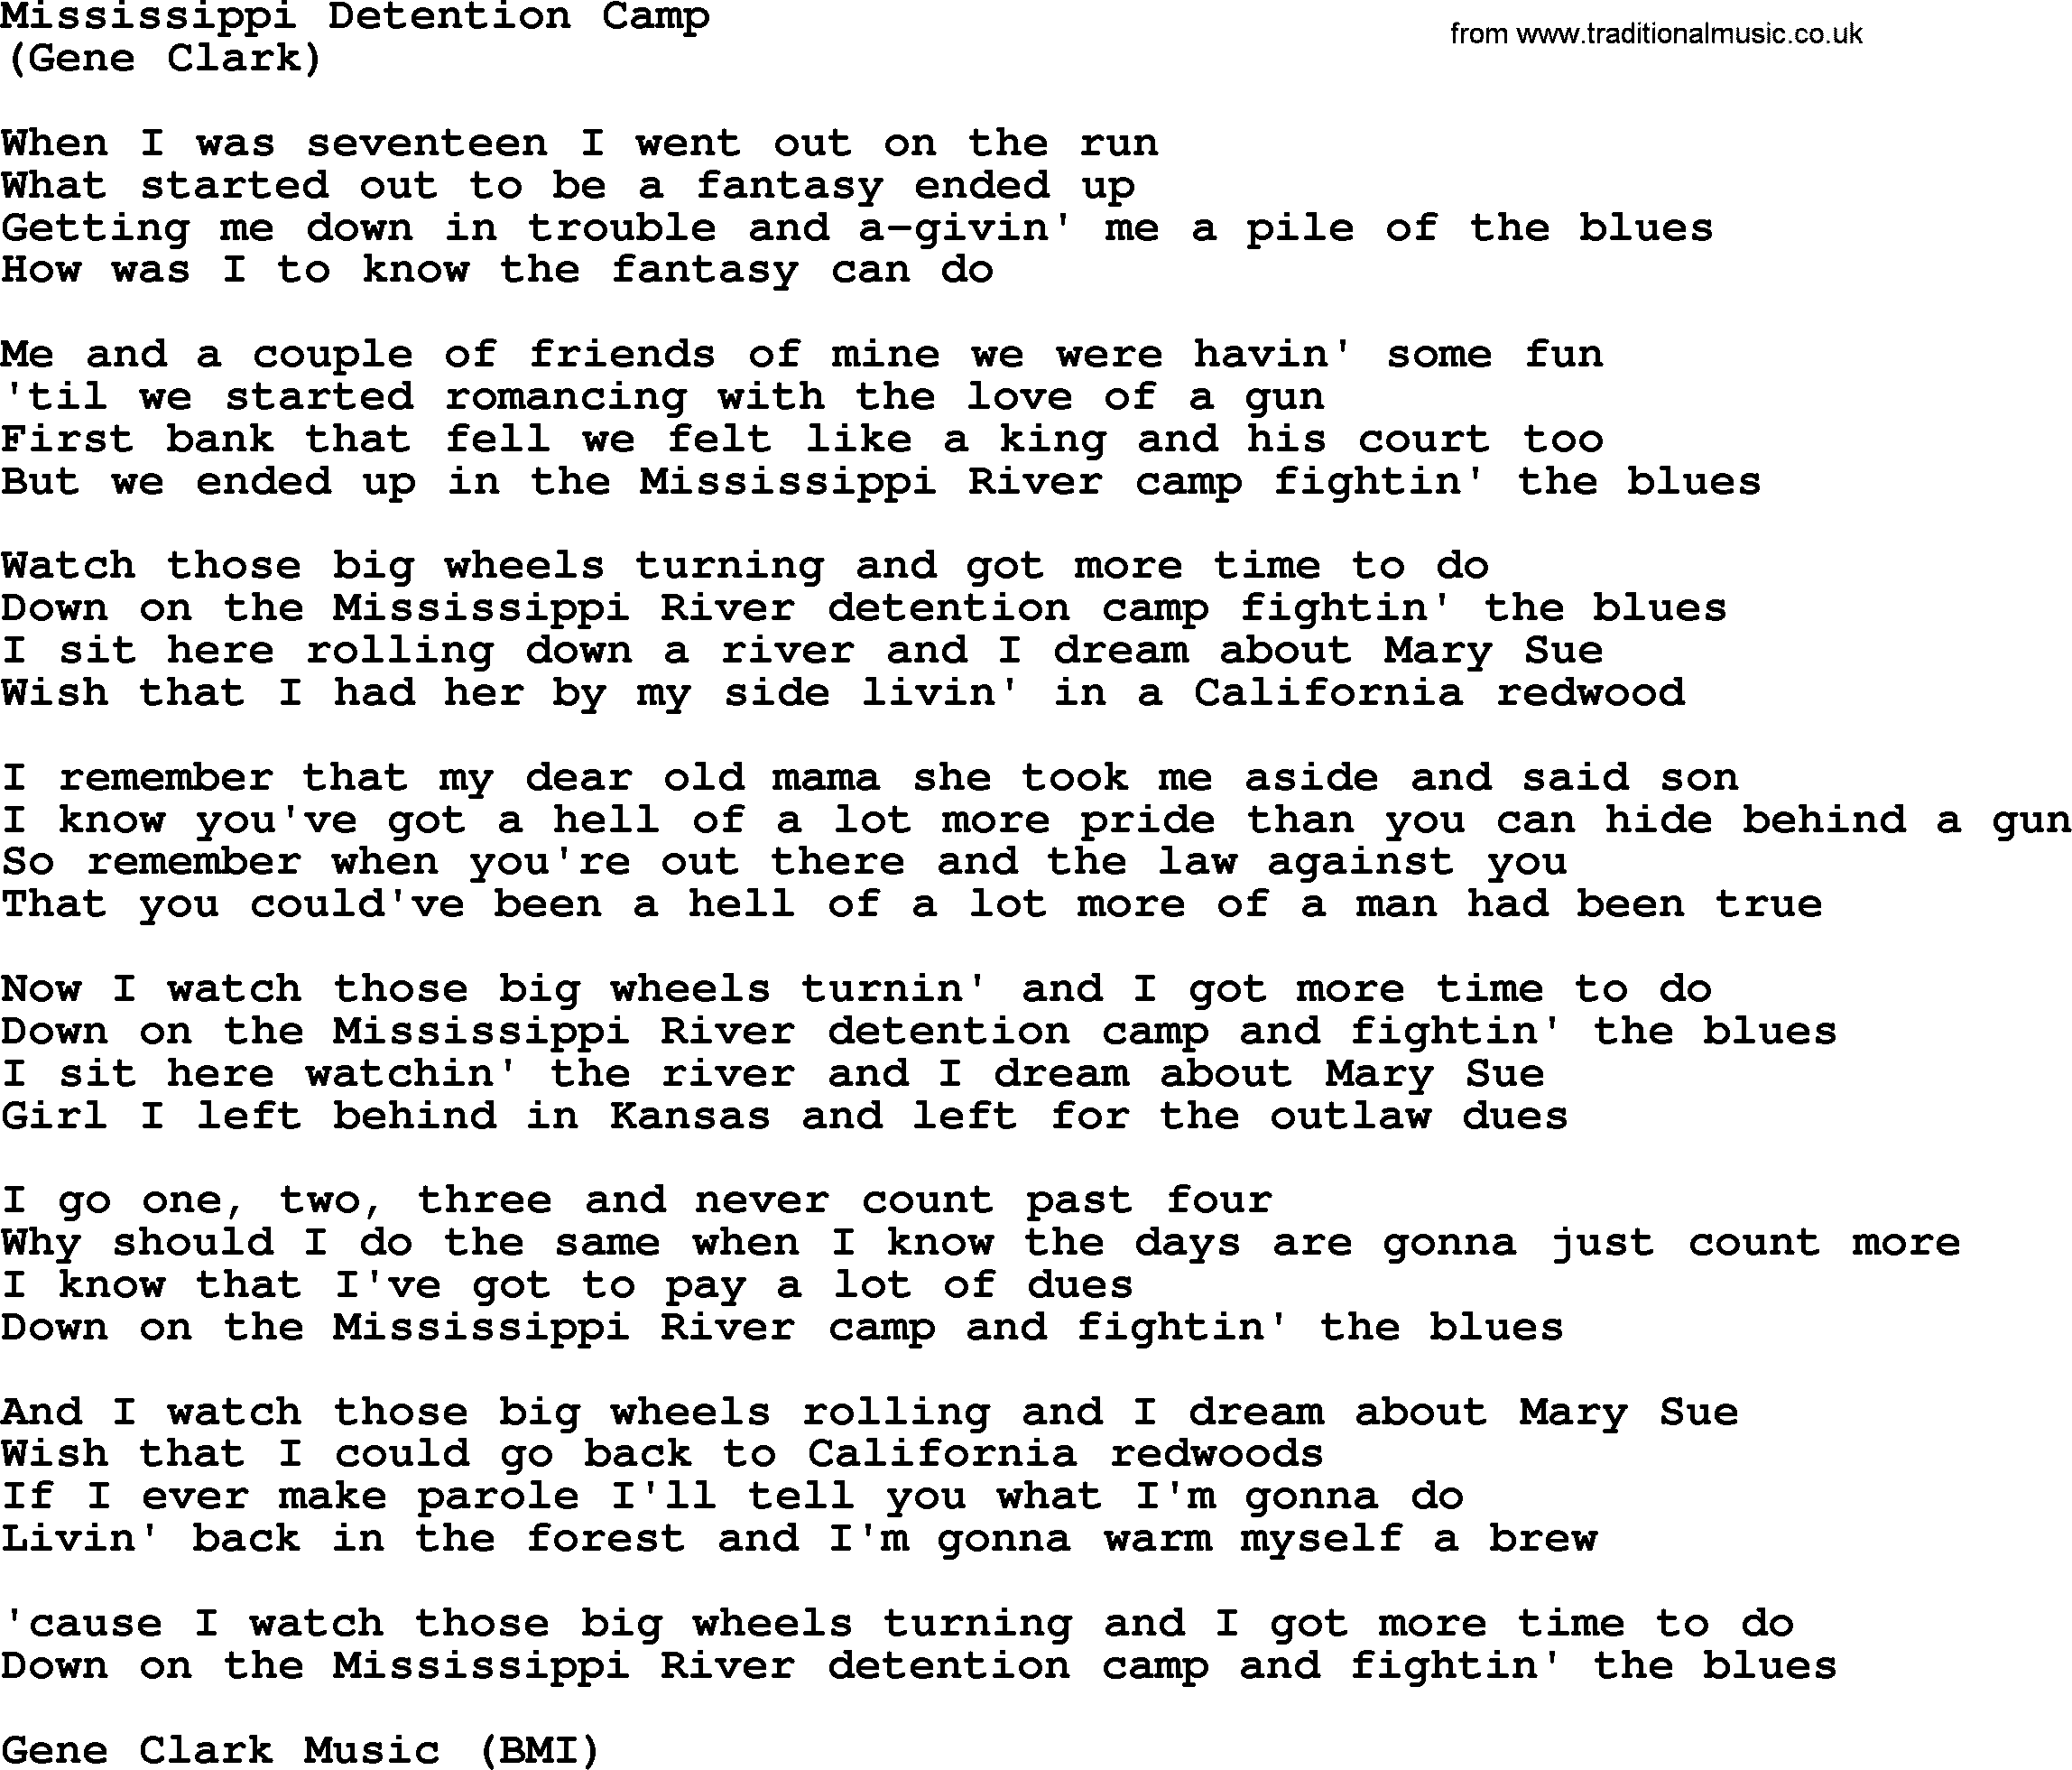 The Byrds song Mississippi Detention Camp, lyrics